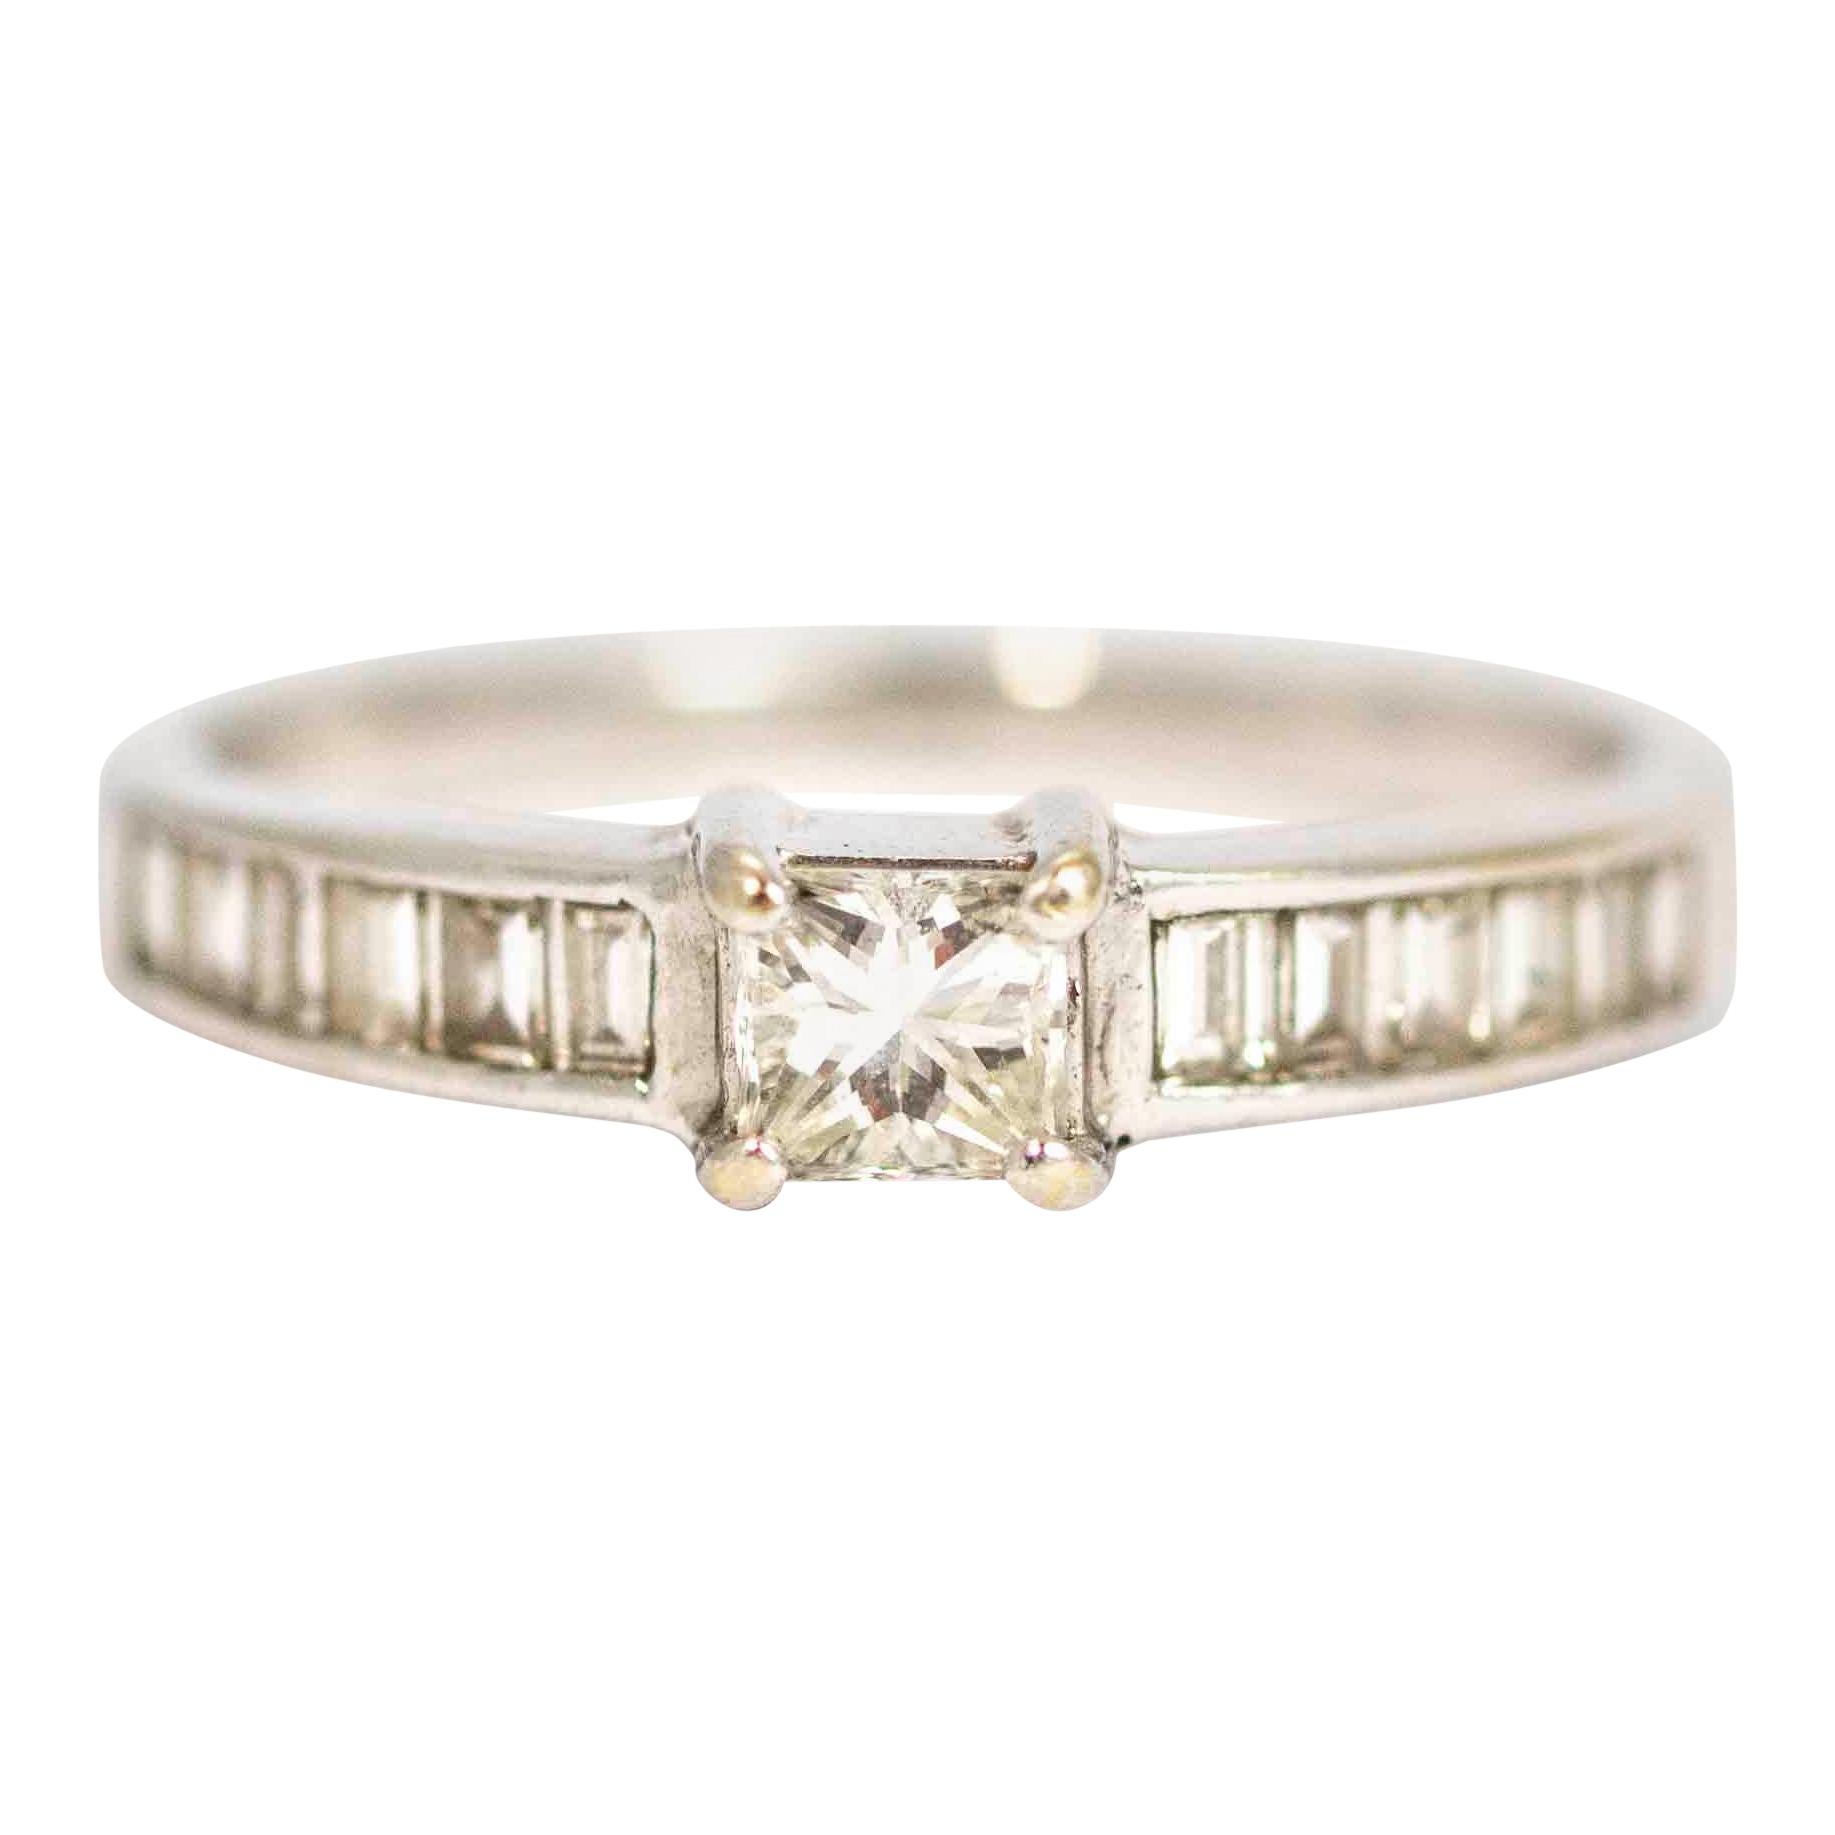 Vintage 18 Carat White Gold Princess Cut Diamond Solitaire Ring